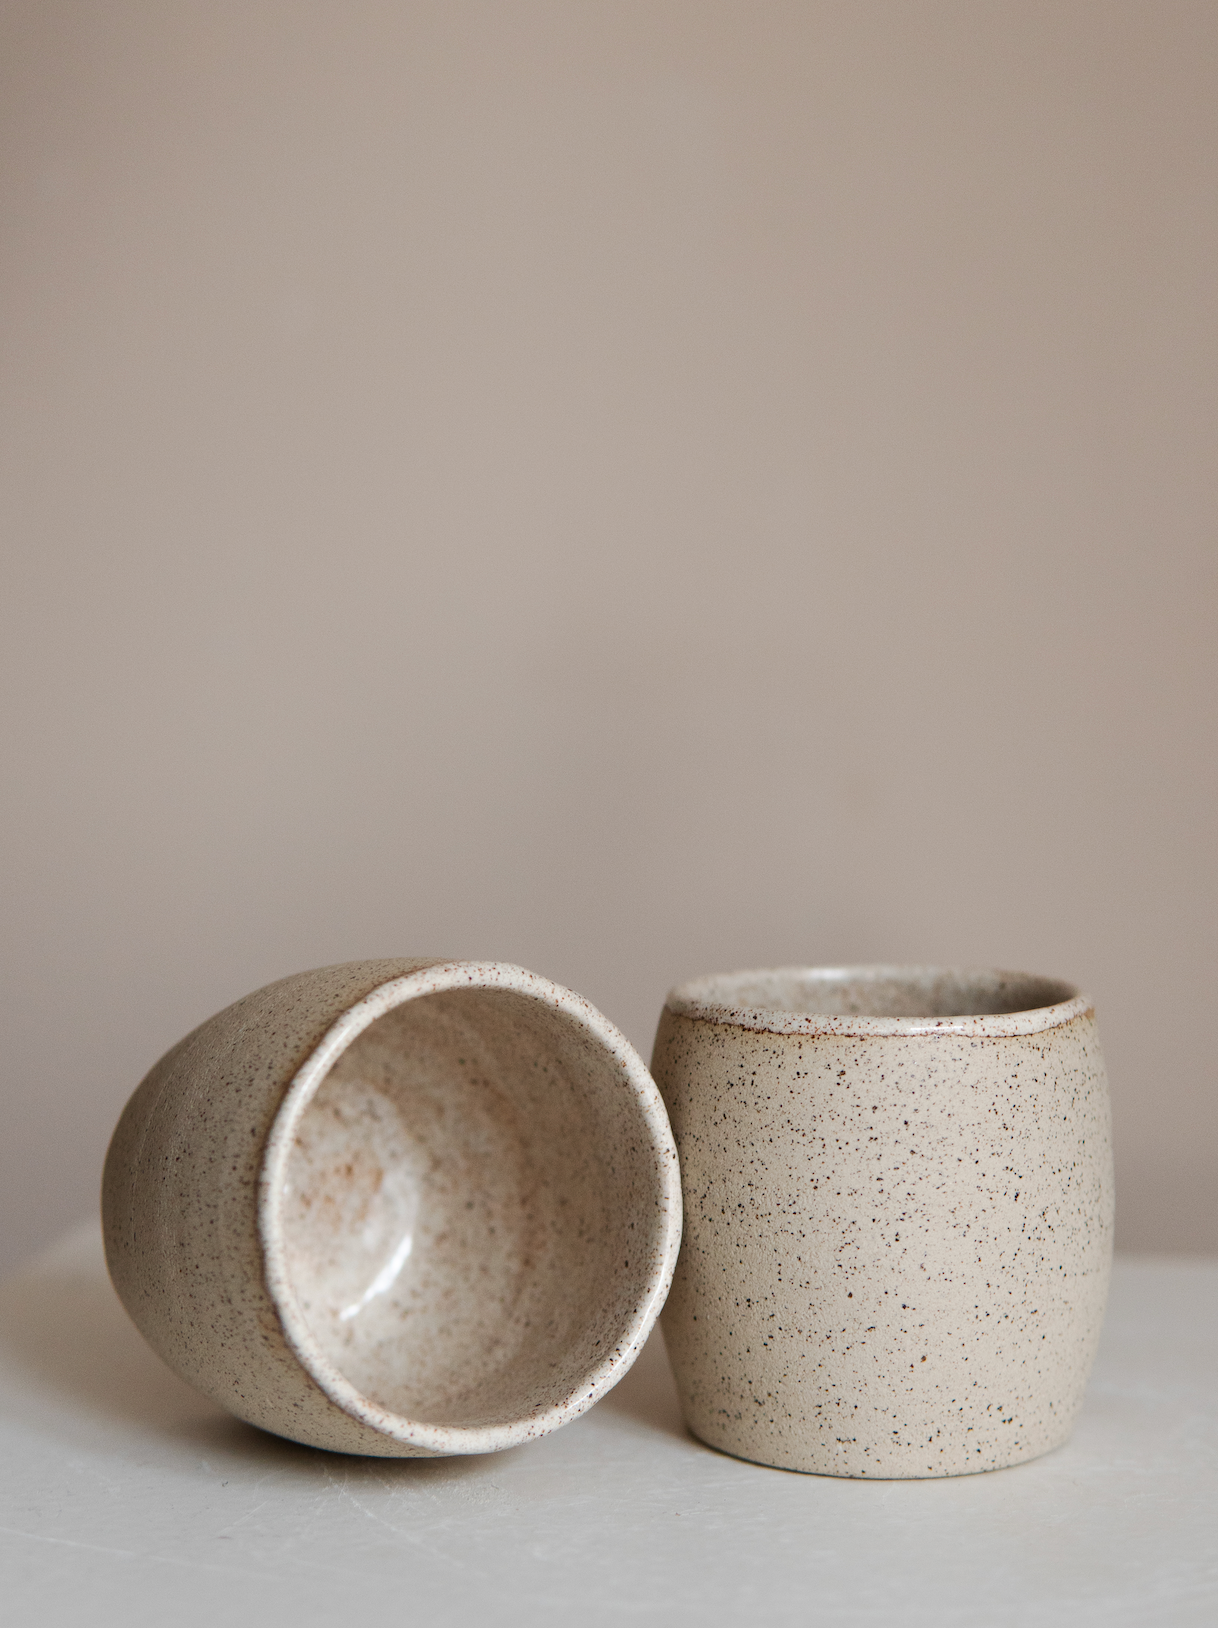 Speckled Espresso Cups Stoneware (2 pieces)